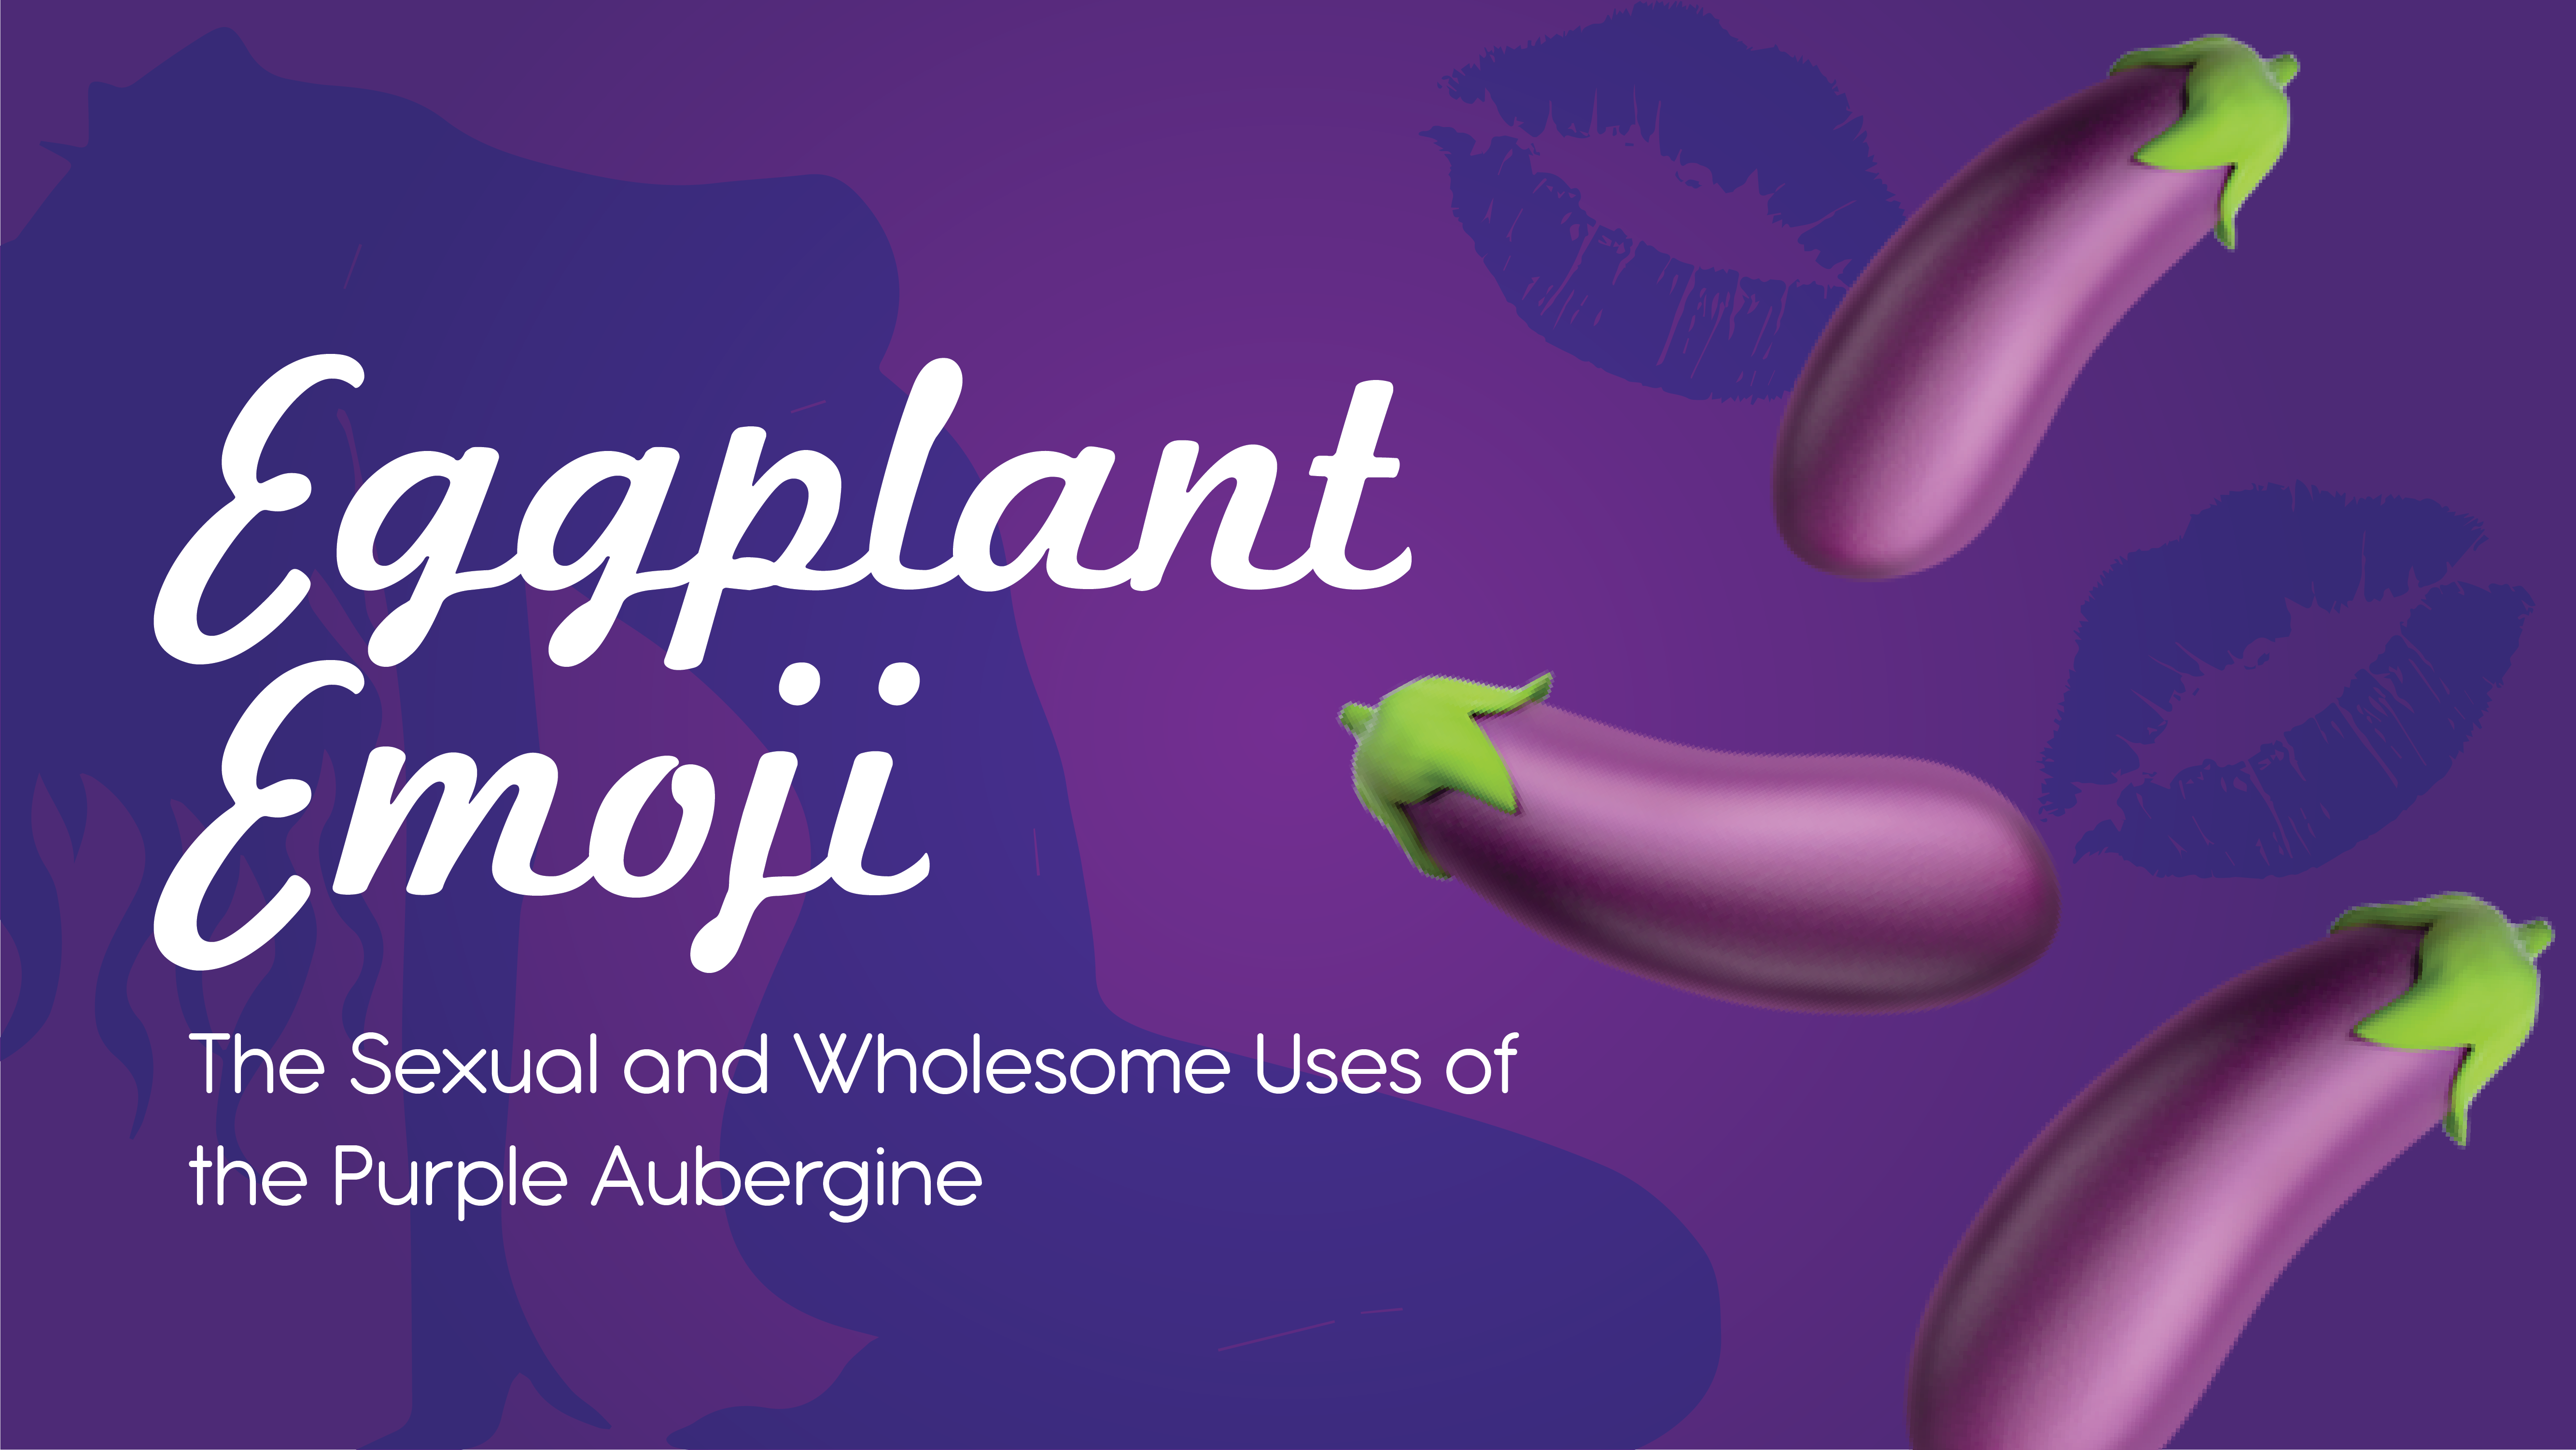 The dick show emoji eggplant discussion